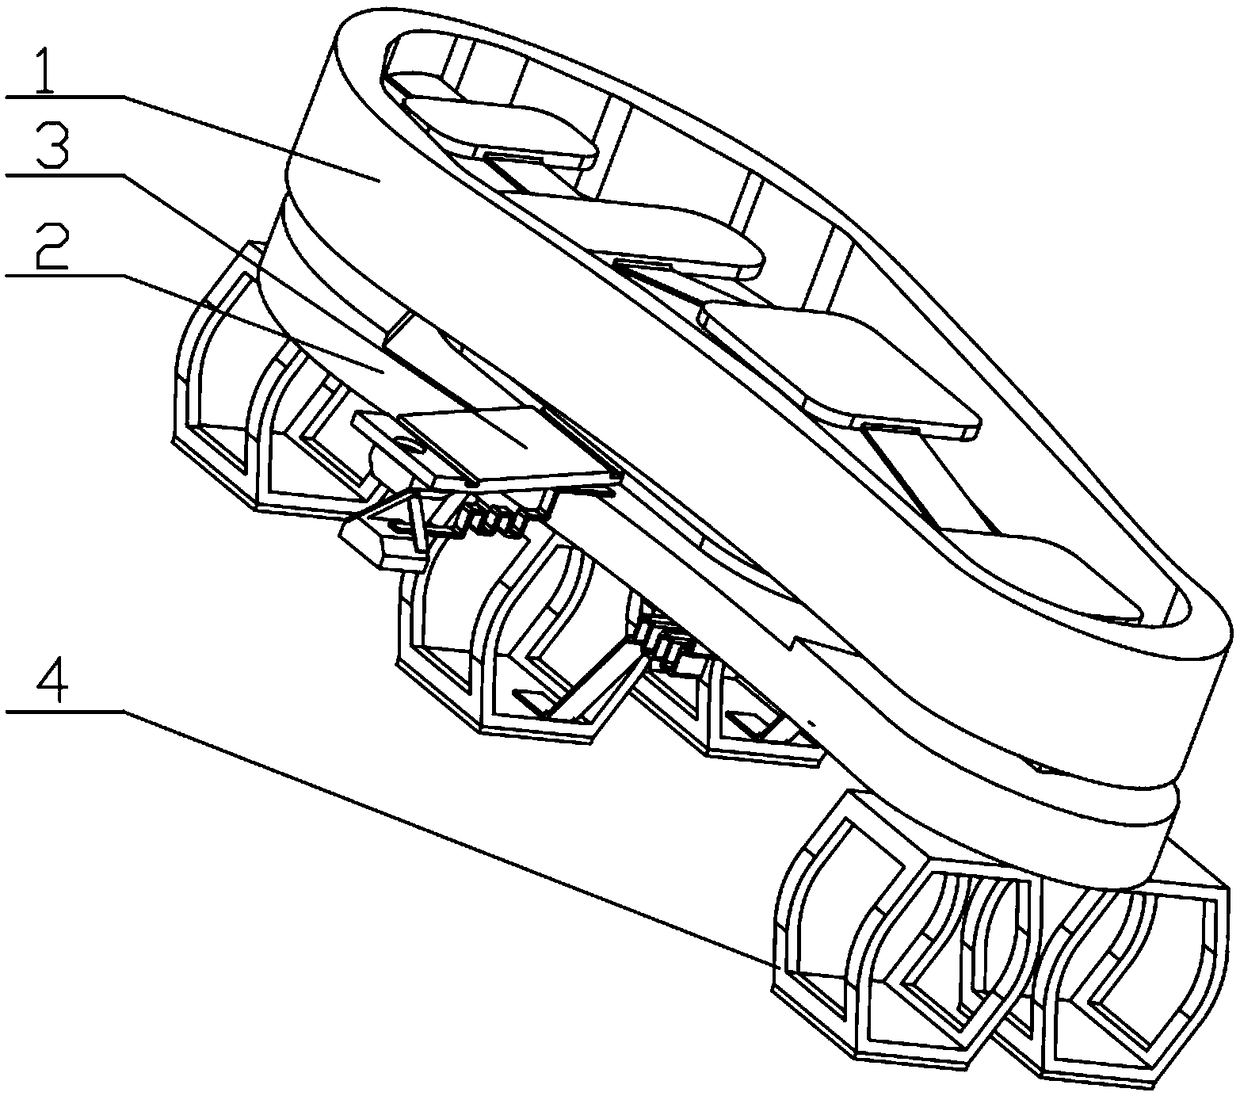 Lower limb exoskeleton auxiliary load bearing foot device